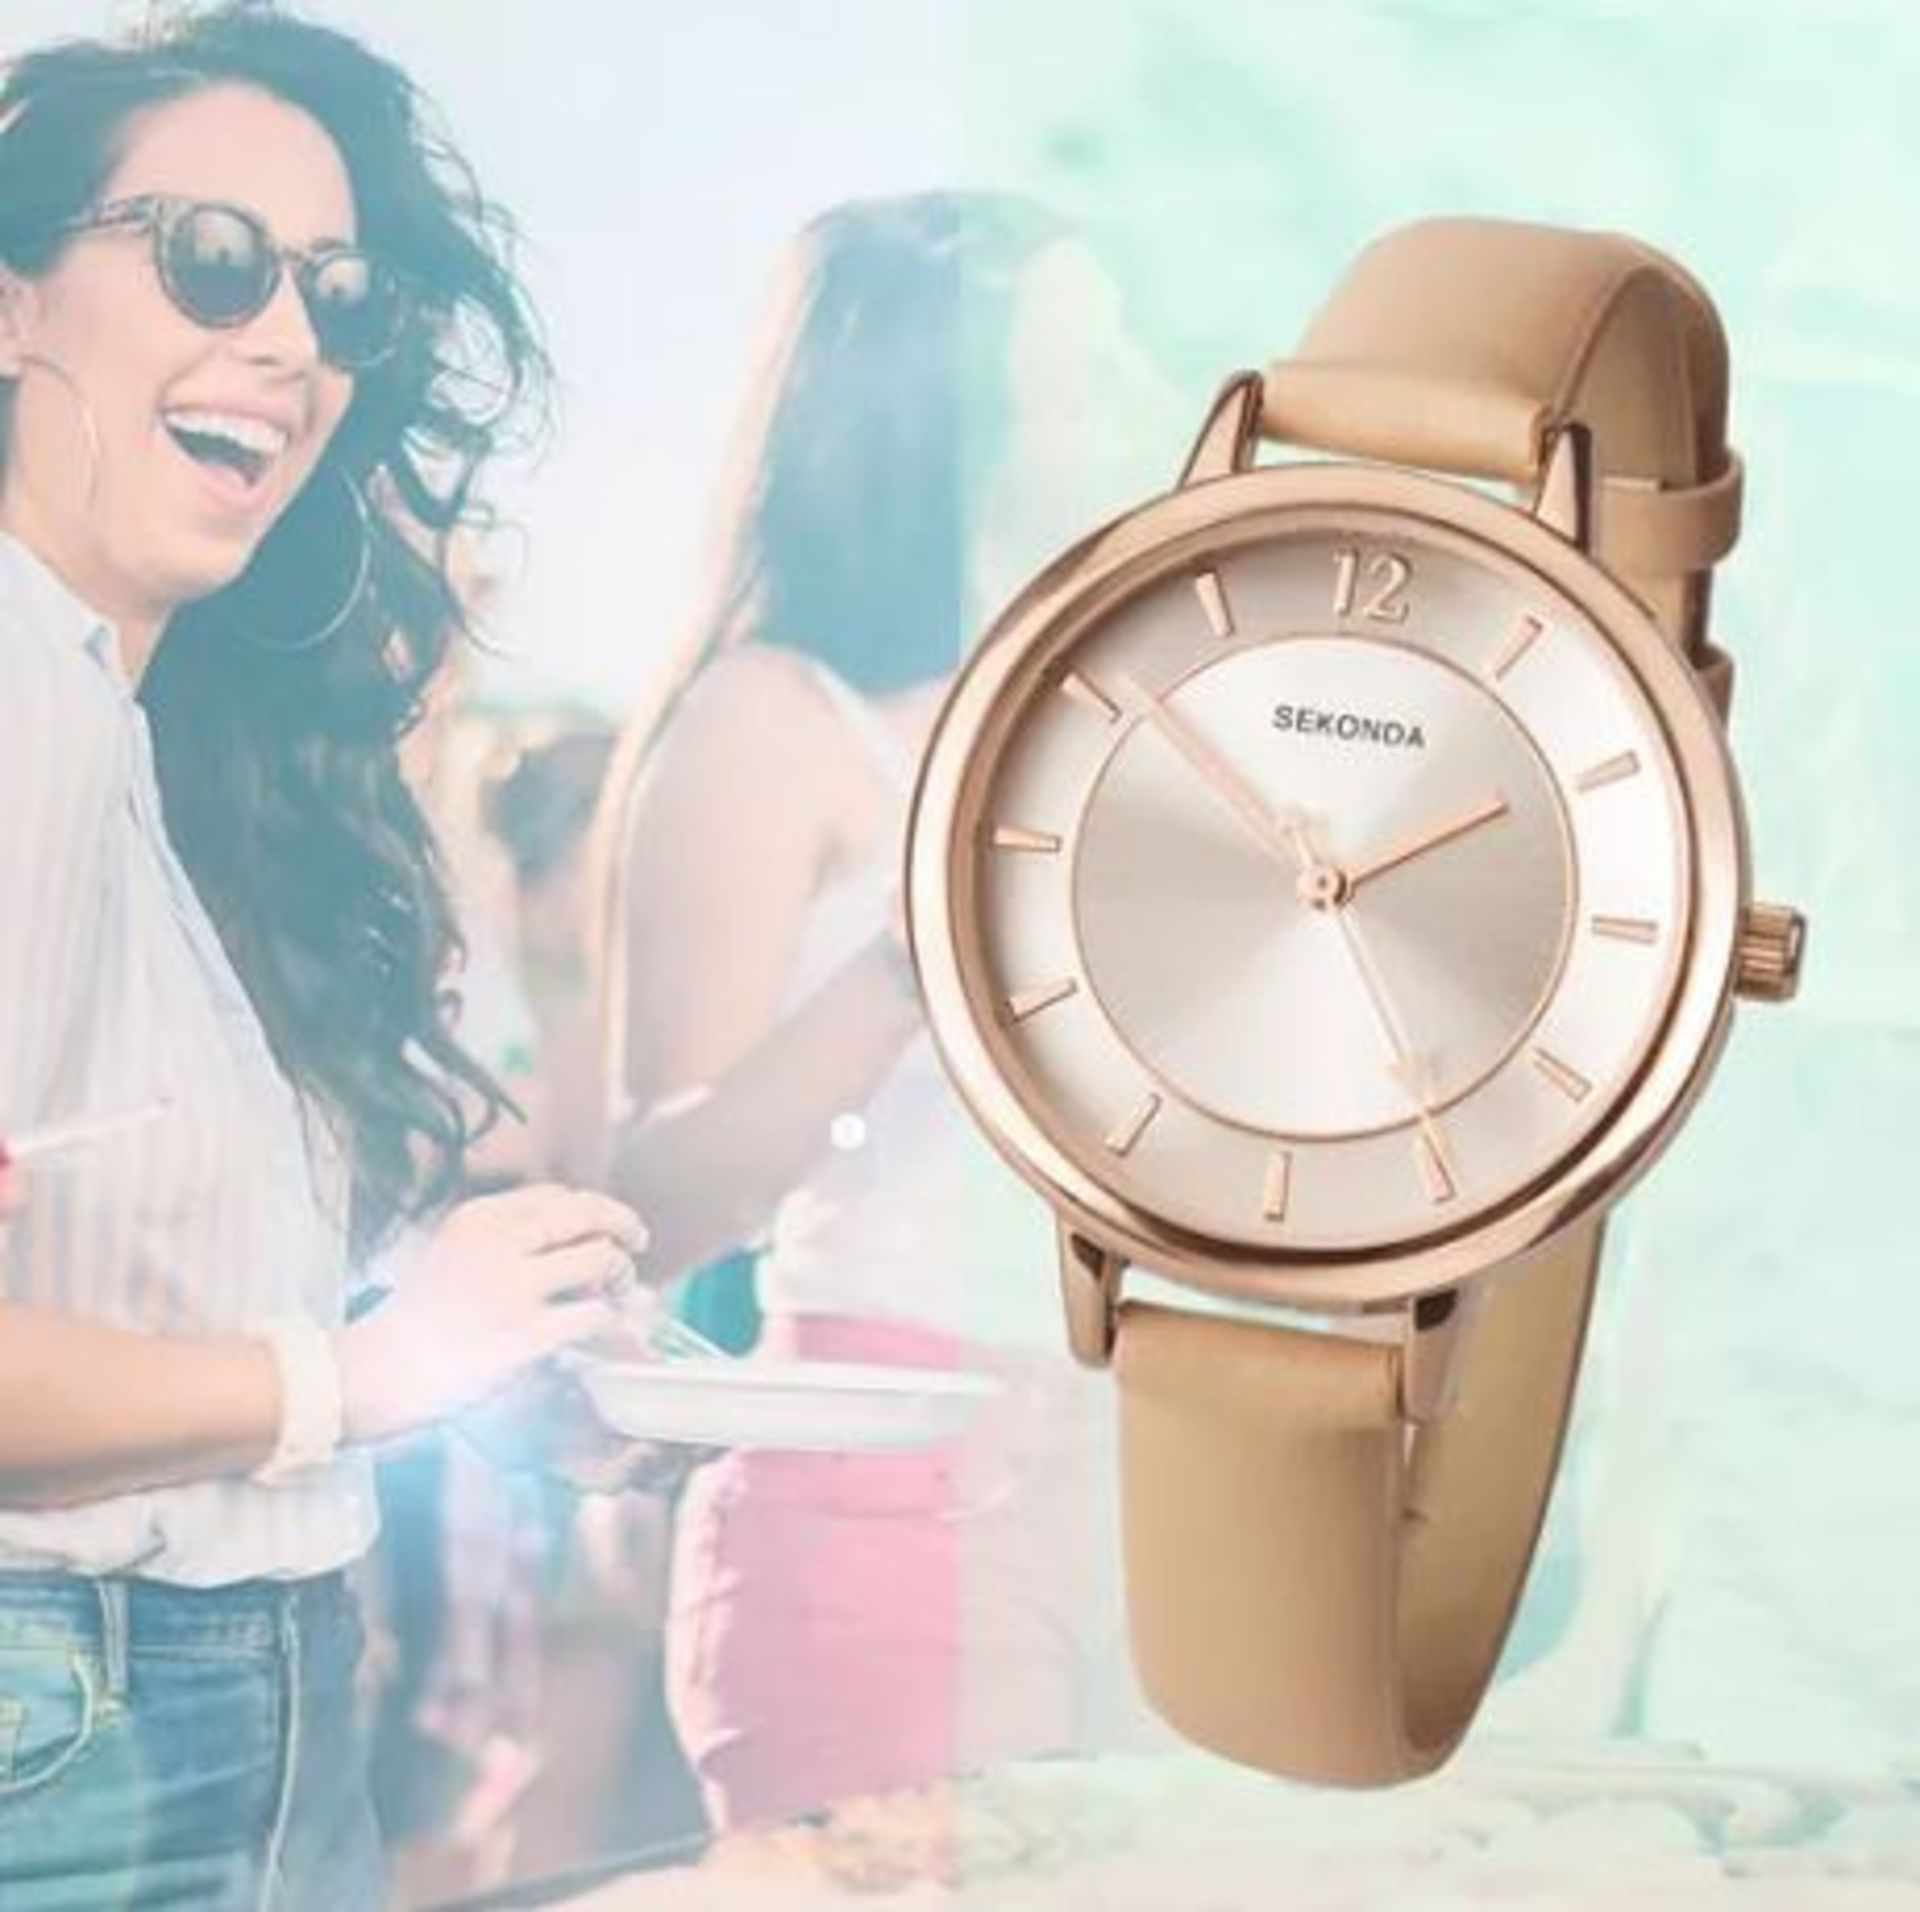 Brand New Sekonda Women's Quartz Watch with Analogue Display 2137.28 - Image 2 of 3